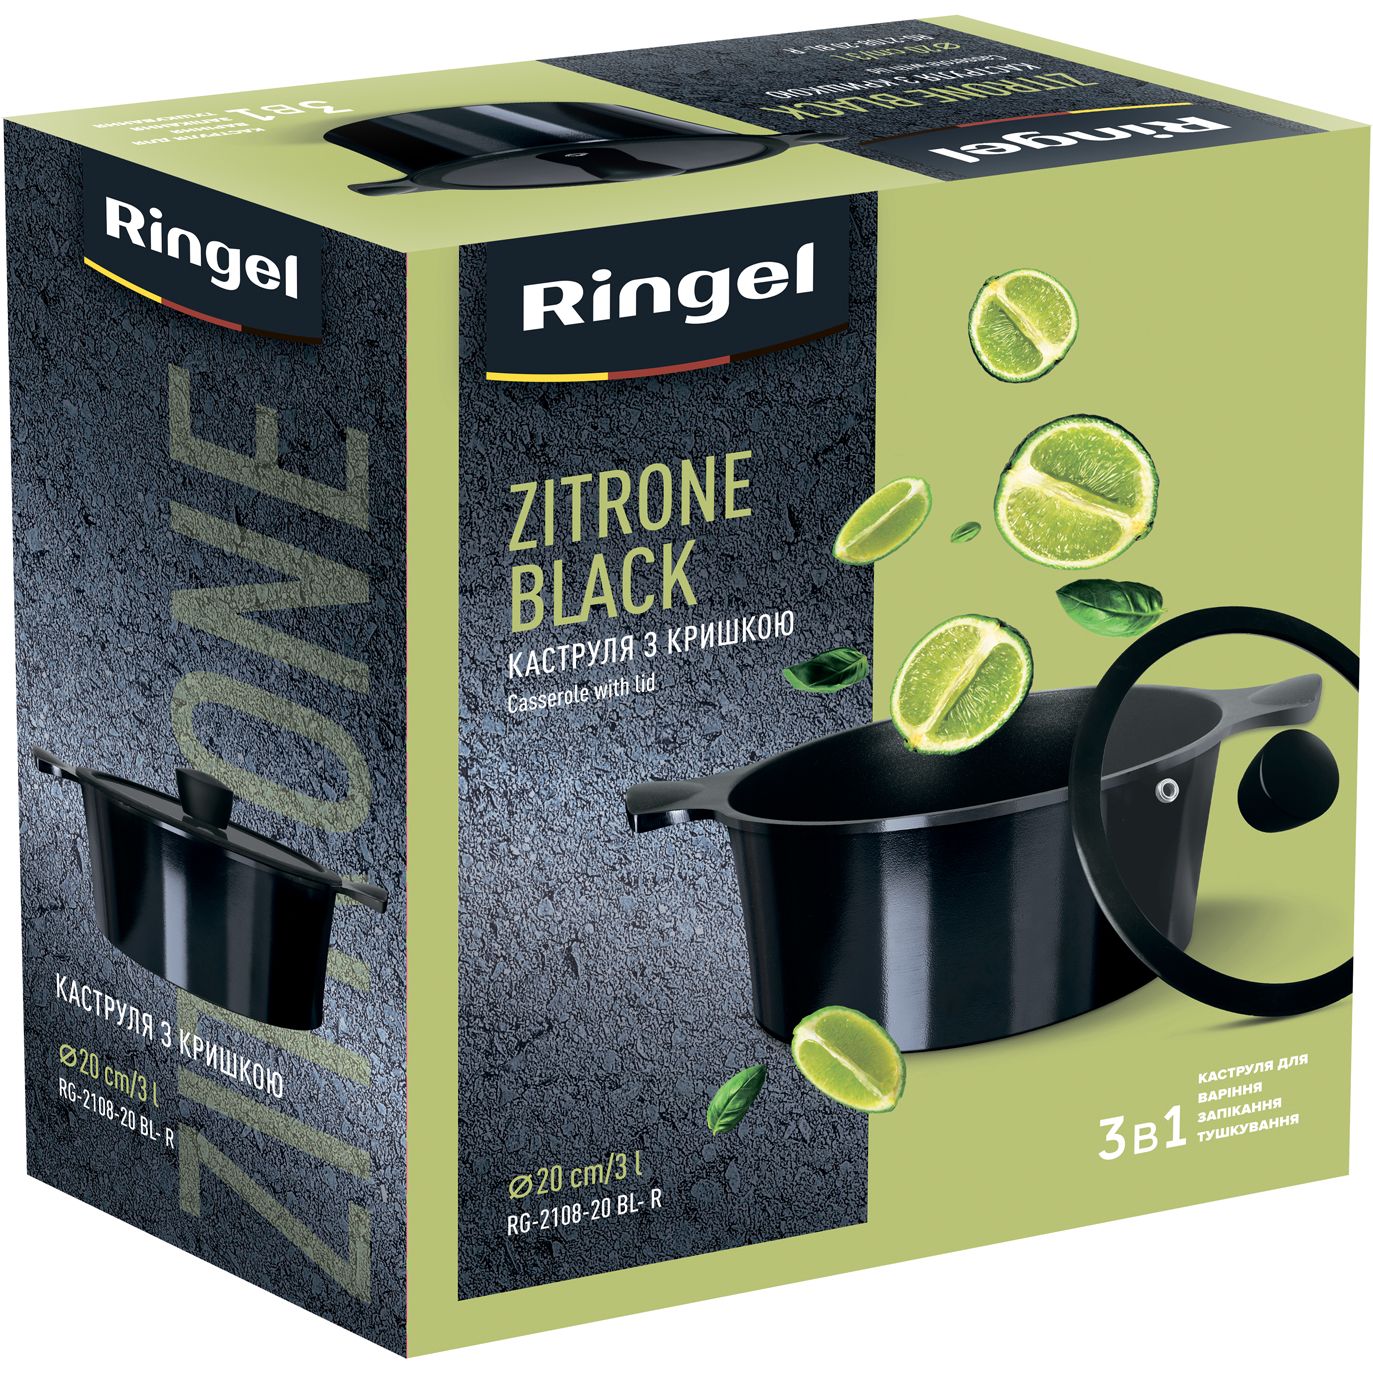 Кастрюля Ringel Zitrone Black, с крышкой, 20 см, 3 л, черный (RG-2108-20 BL- R) - фото 7